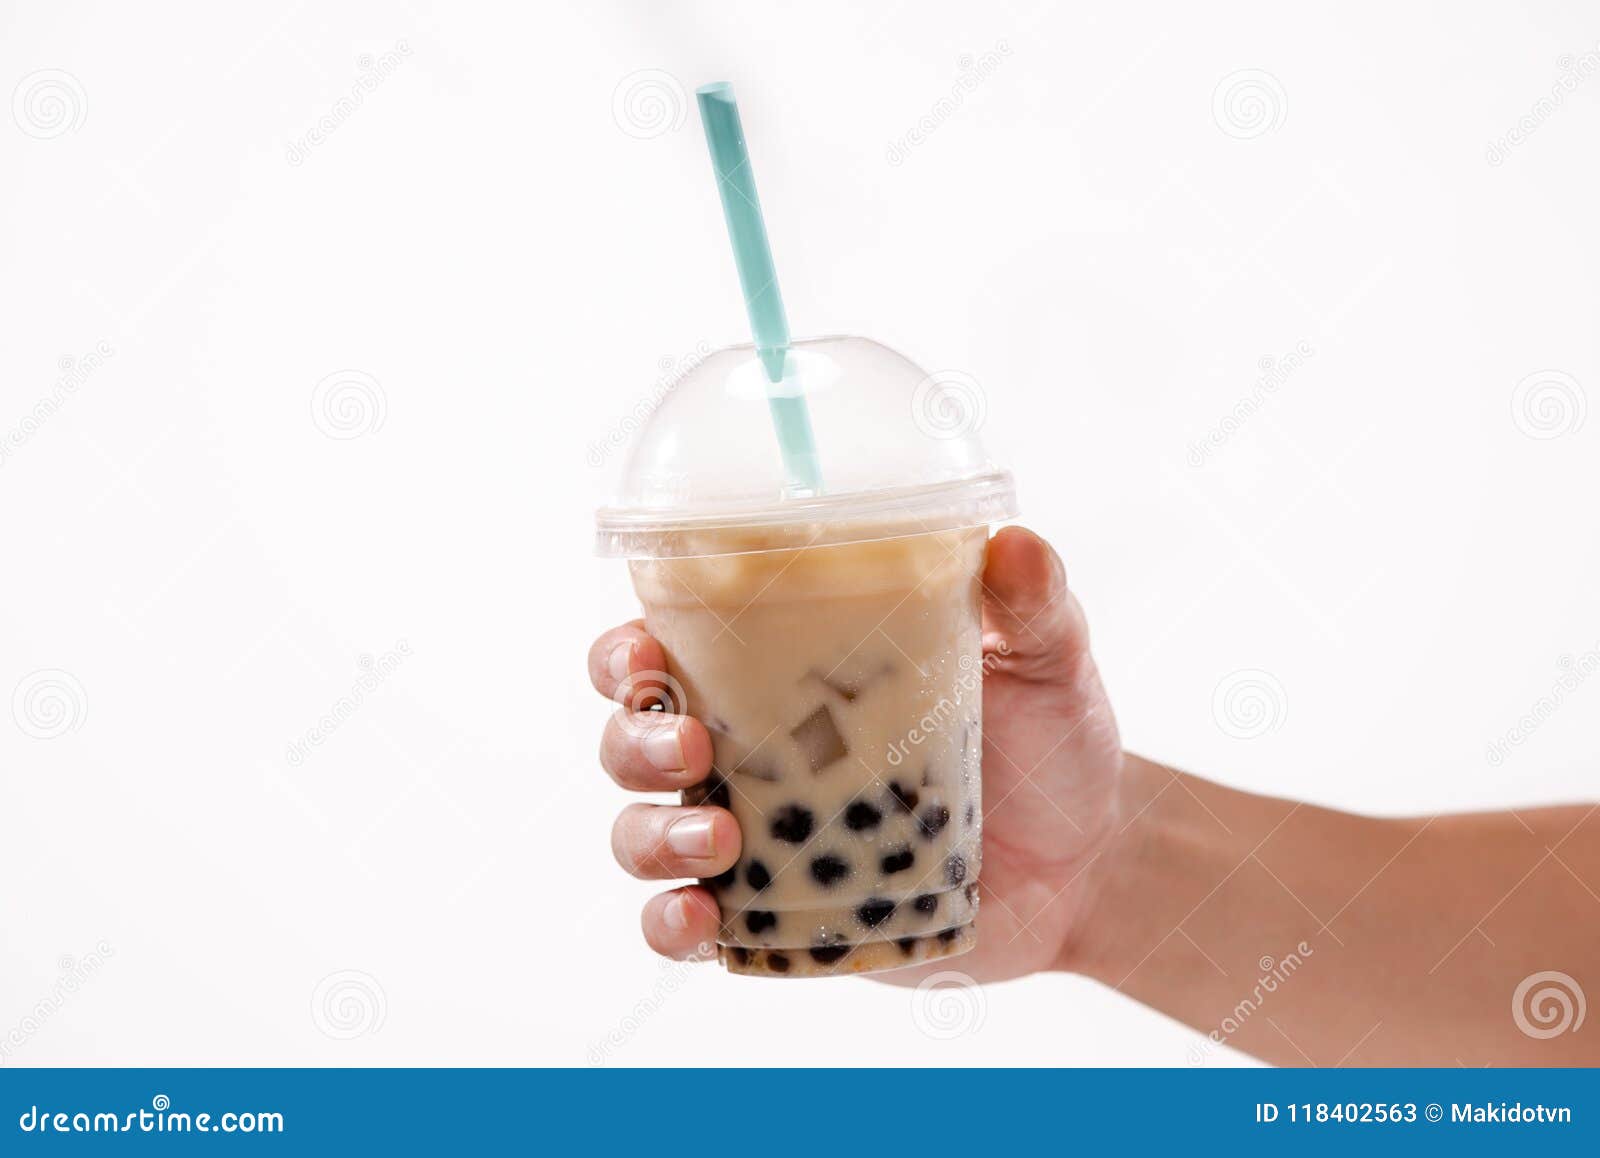 https://thumbs.dreamstime.com/z/holding-plastic-glass-refreshing-taiwan-iced-milk-tea-bubble-boba-118402563.jpg